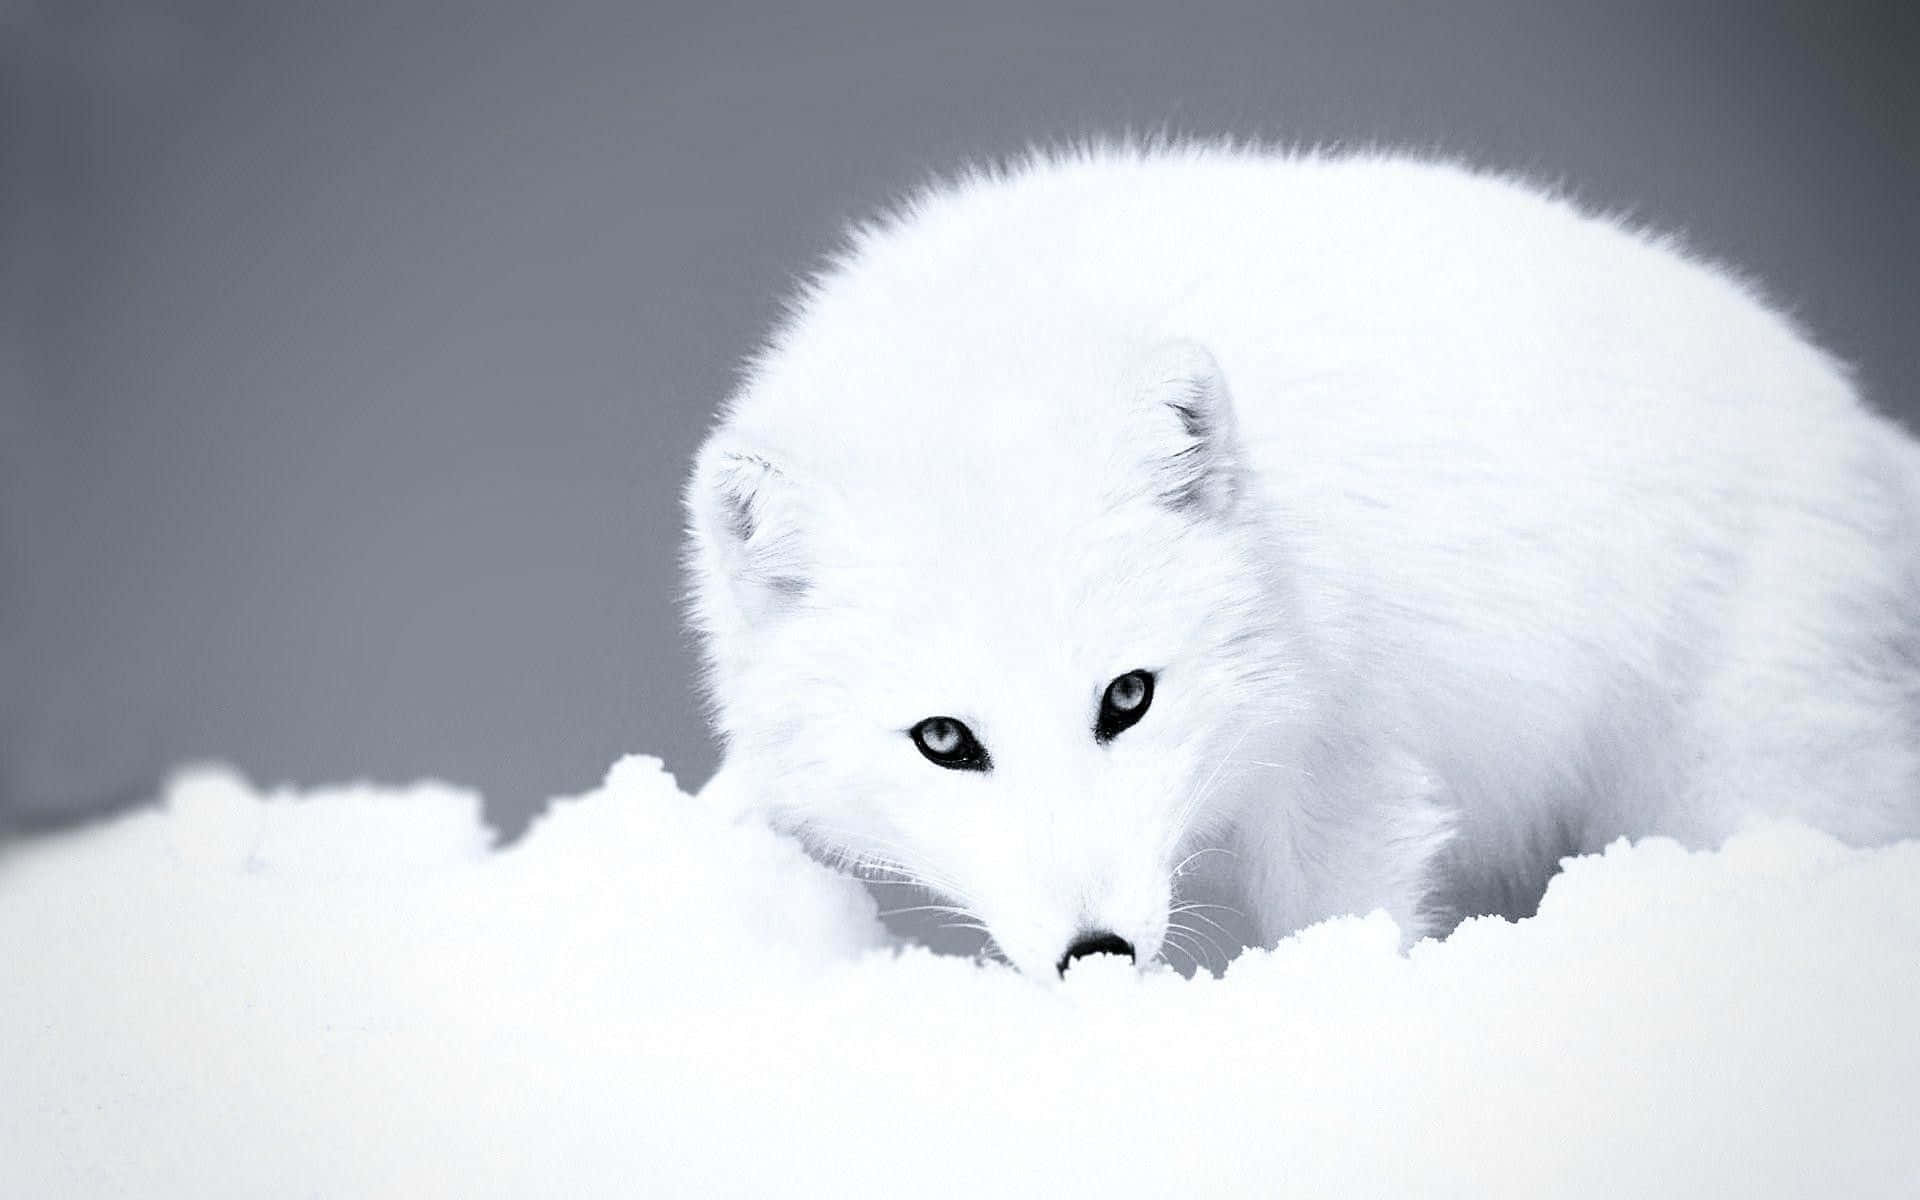 Arctic Fox in its Winter Wonderland